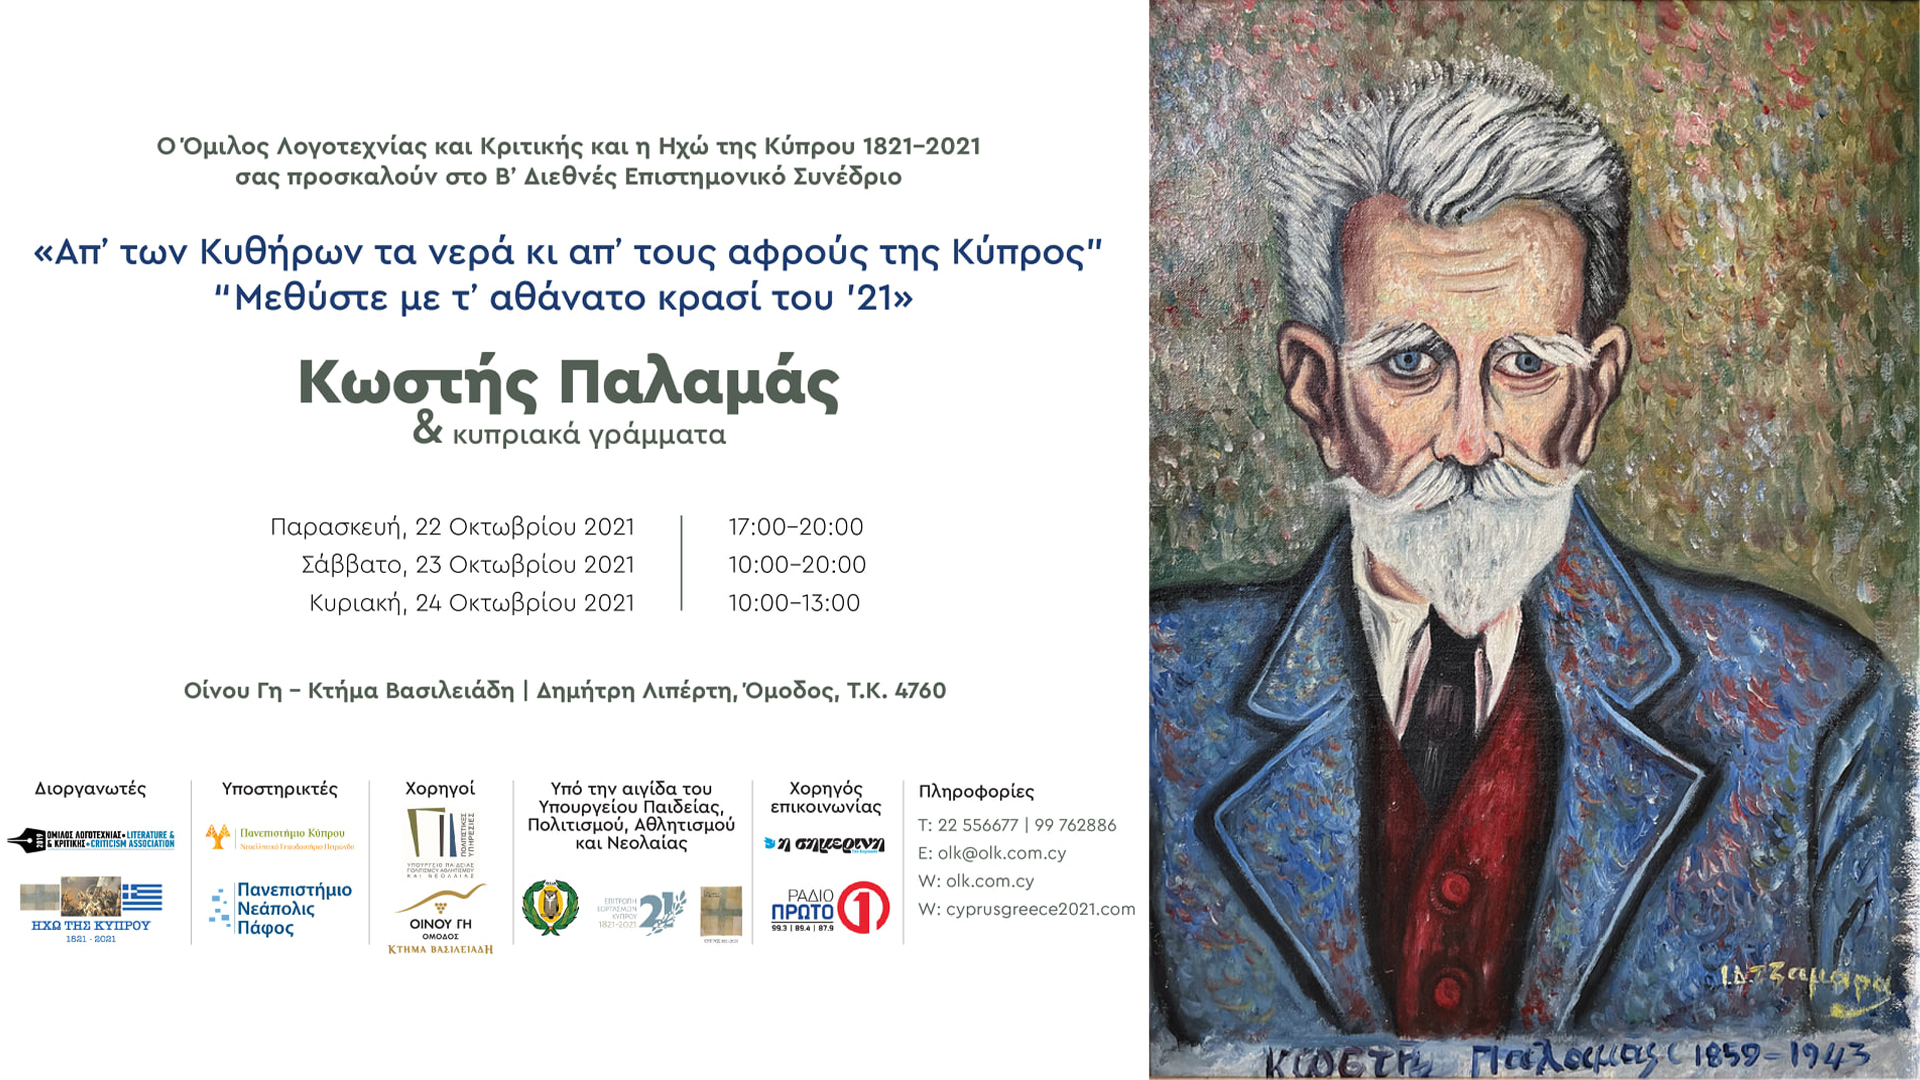 LIVE – Β’ Διεθνές Επιστημονικό Συνέδριο – «Απ’ των Κυθήρων τα νερά κι απ’ τους αφρούς της Κύπρος» 22-24/10/2021